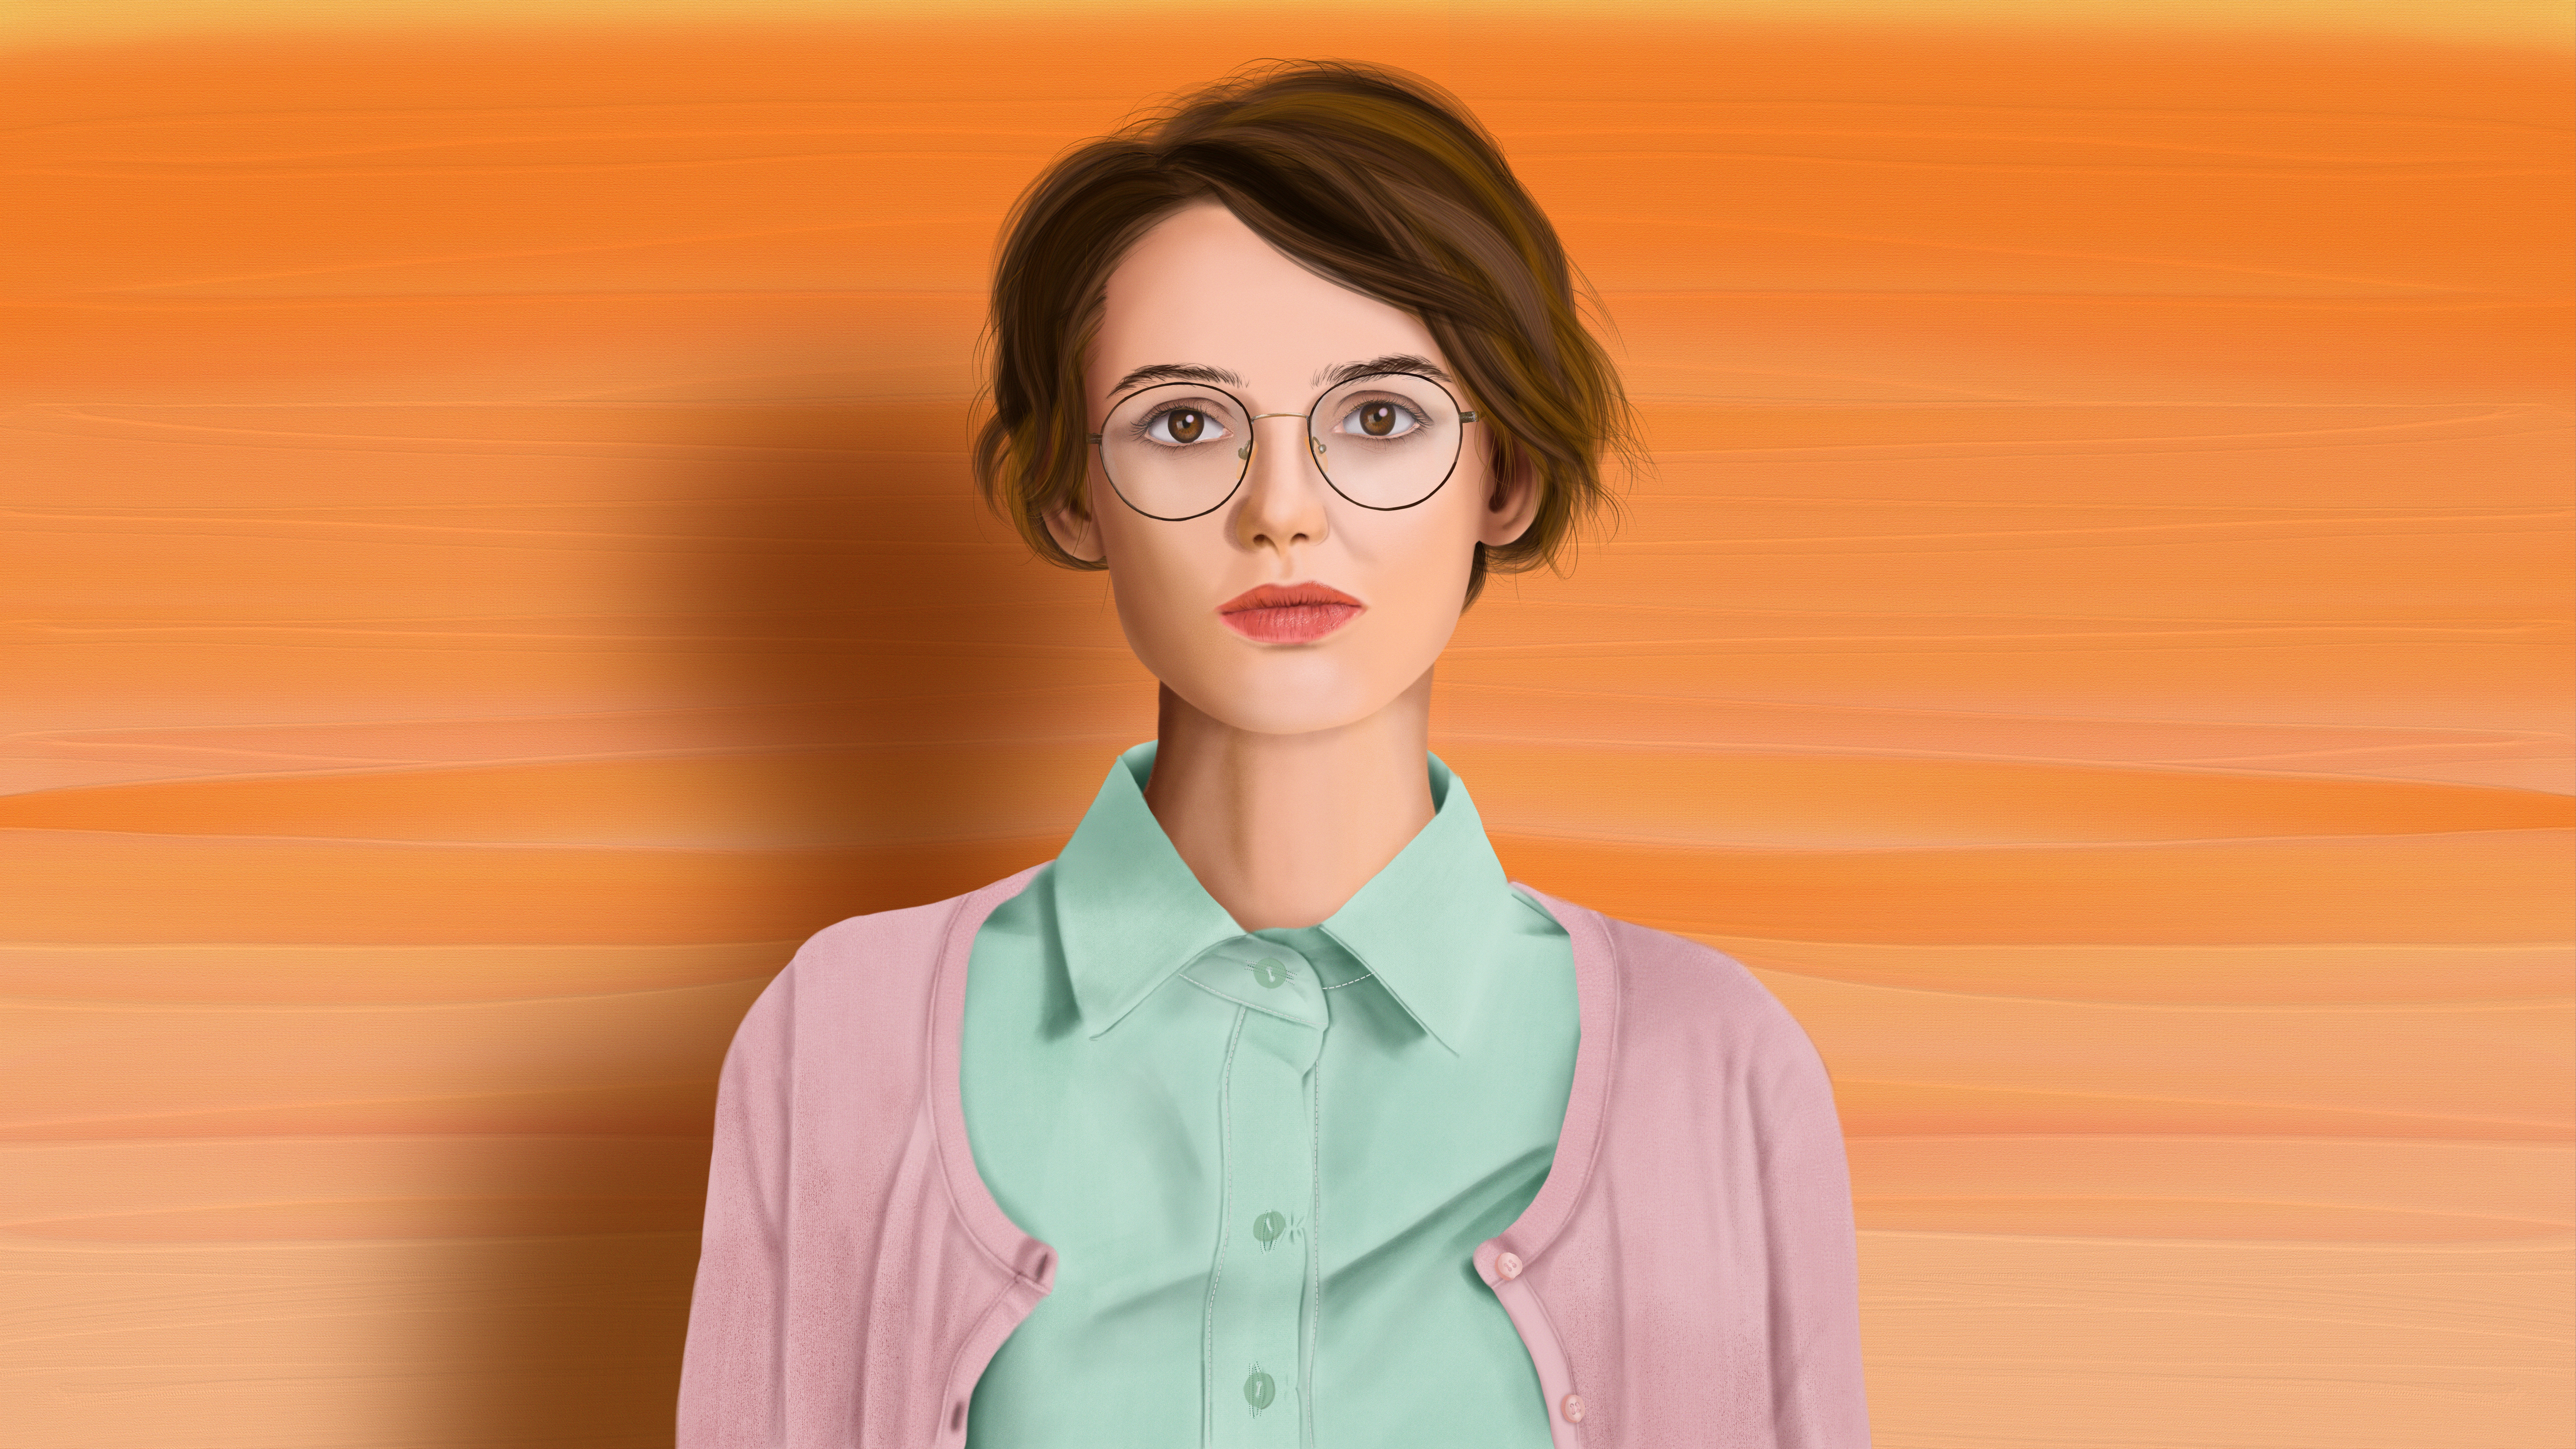 General 9784x5504 women portrait illustration digital art glasses